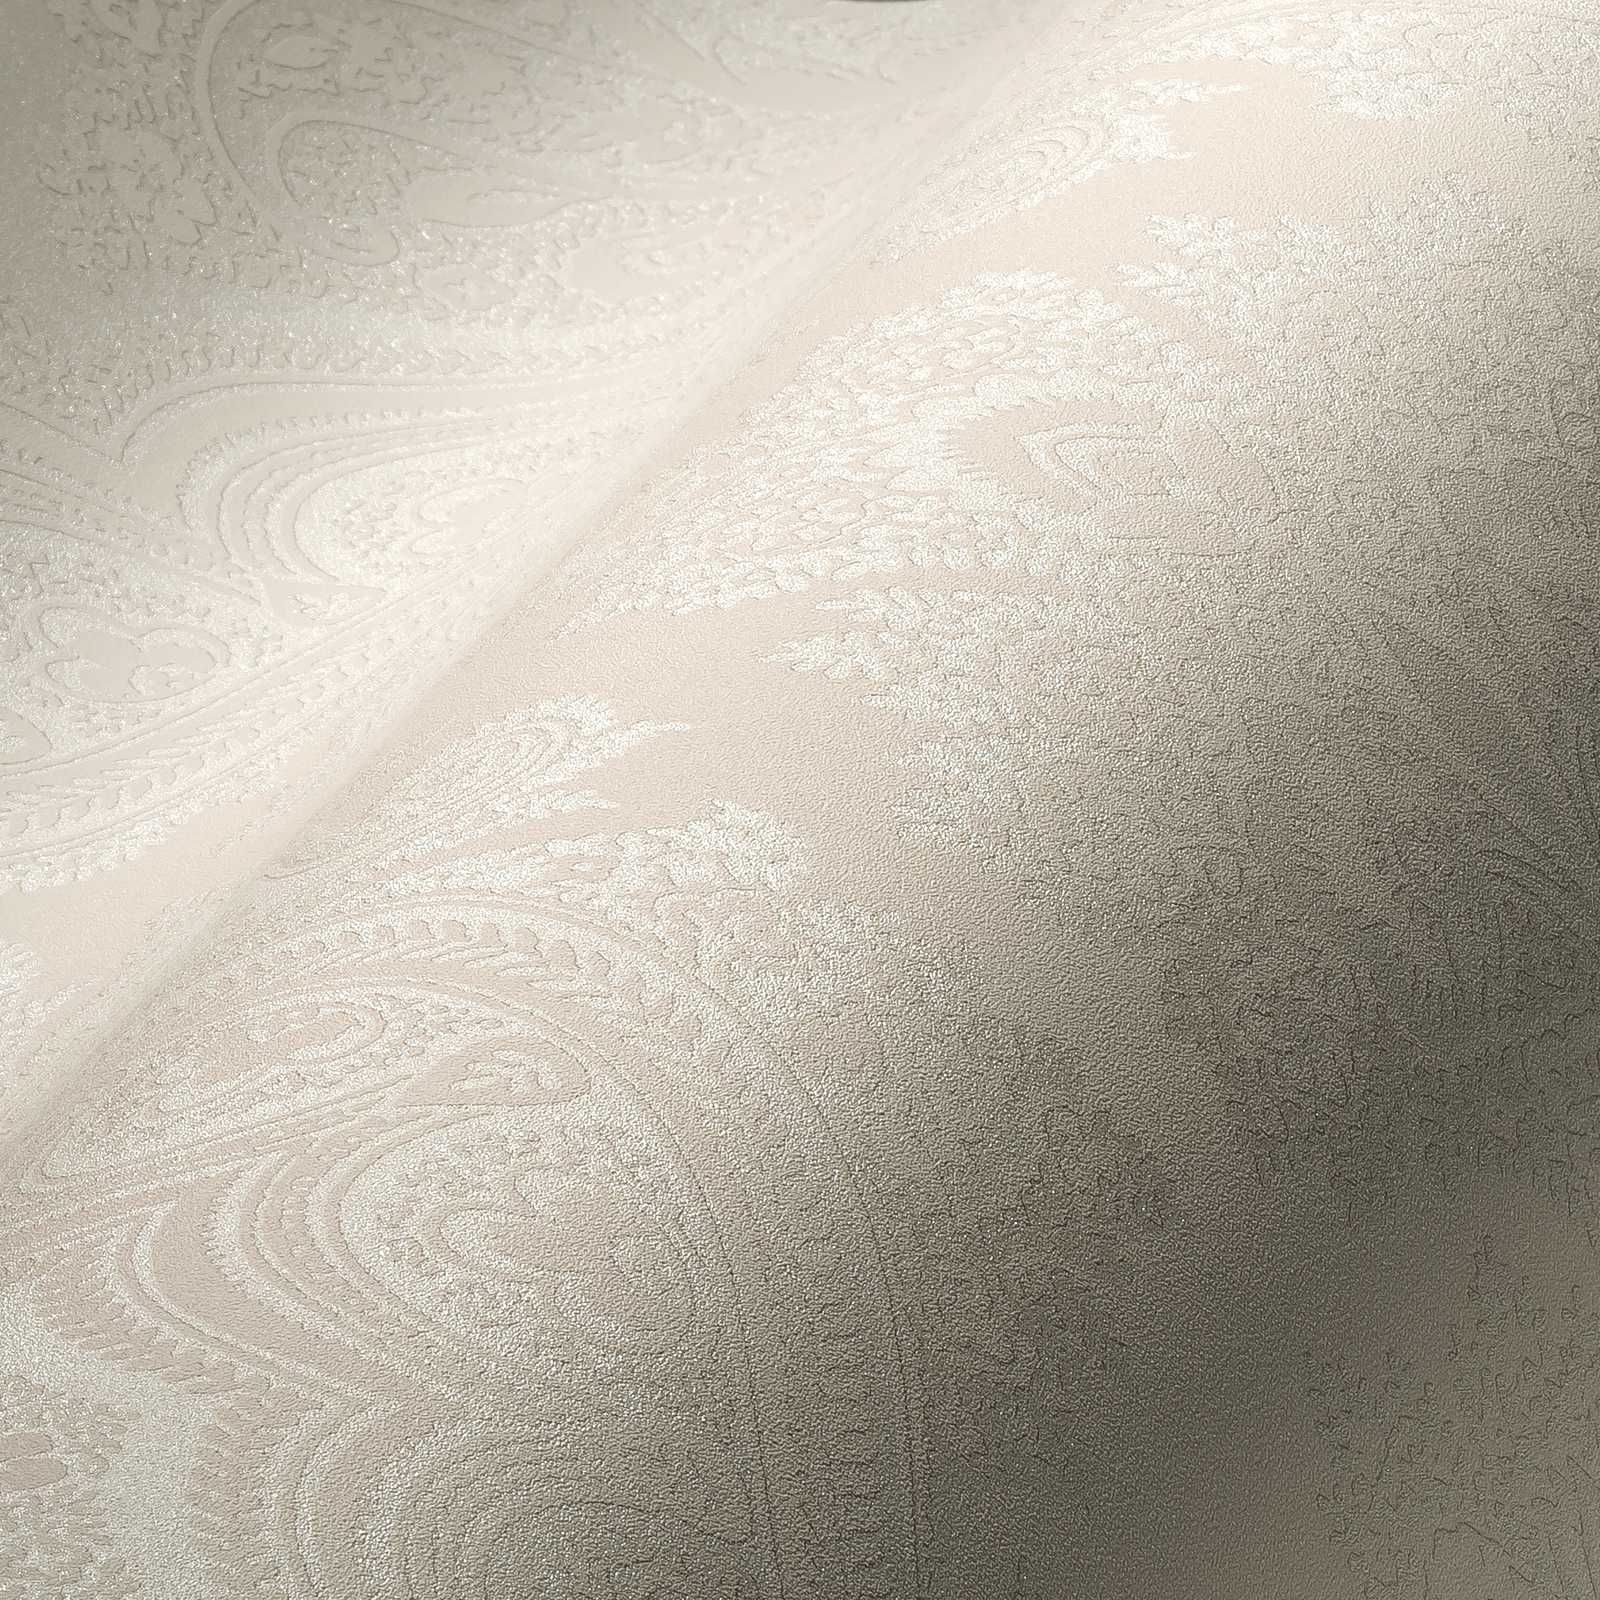 Shimmering baroque wallpaper in beige AS387082